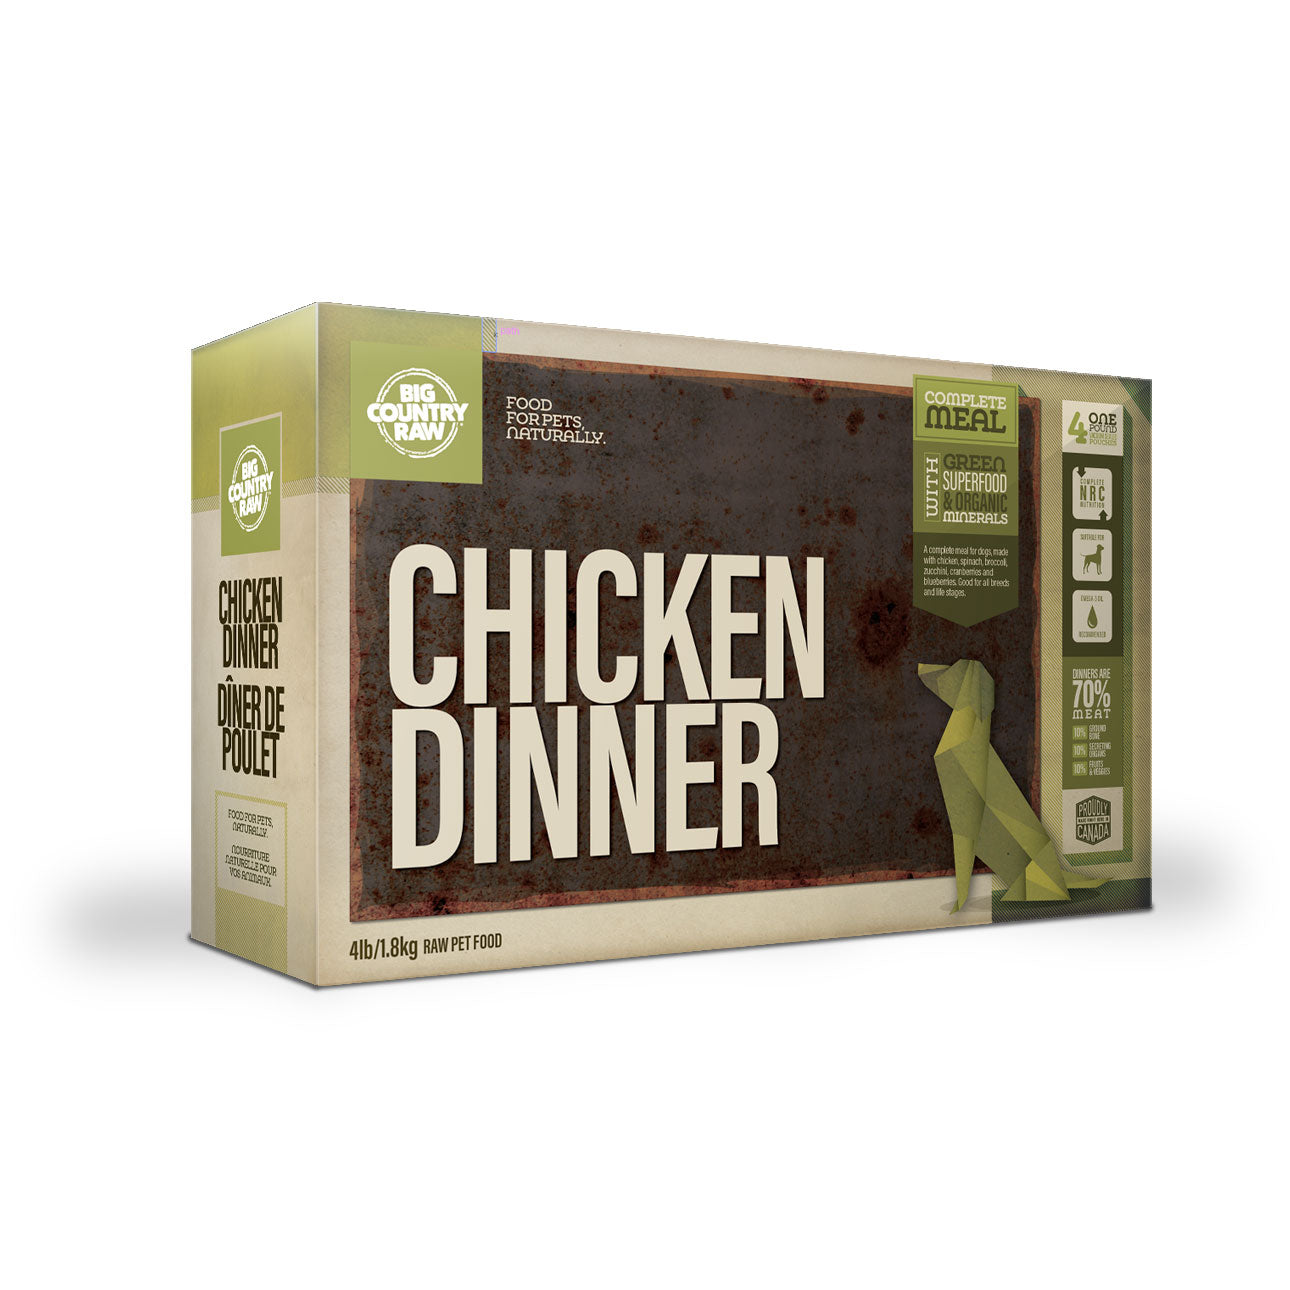 Big Country Raw Chicken Dinner Carton